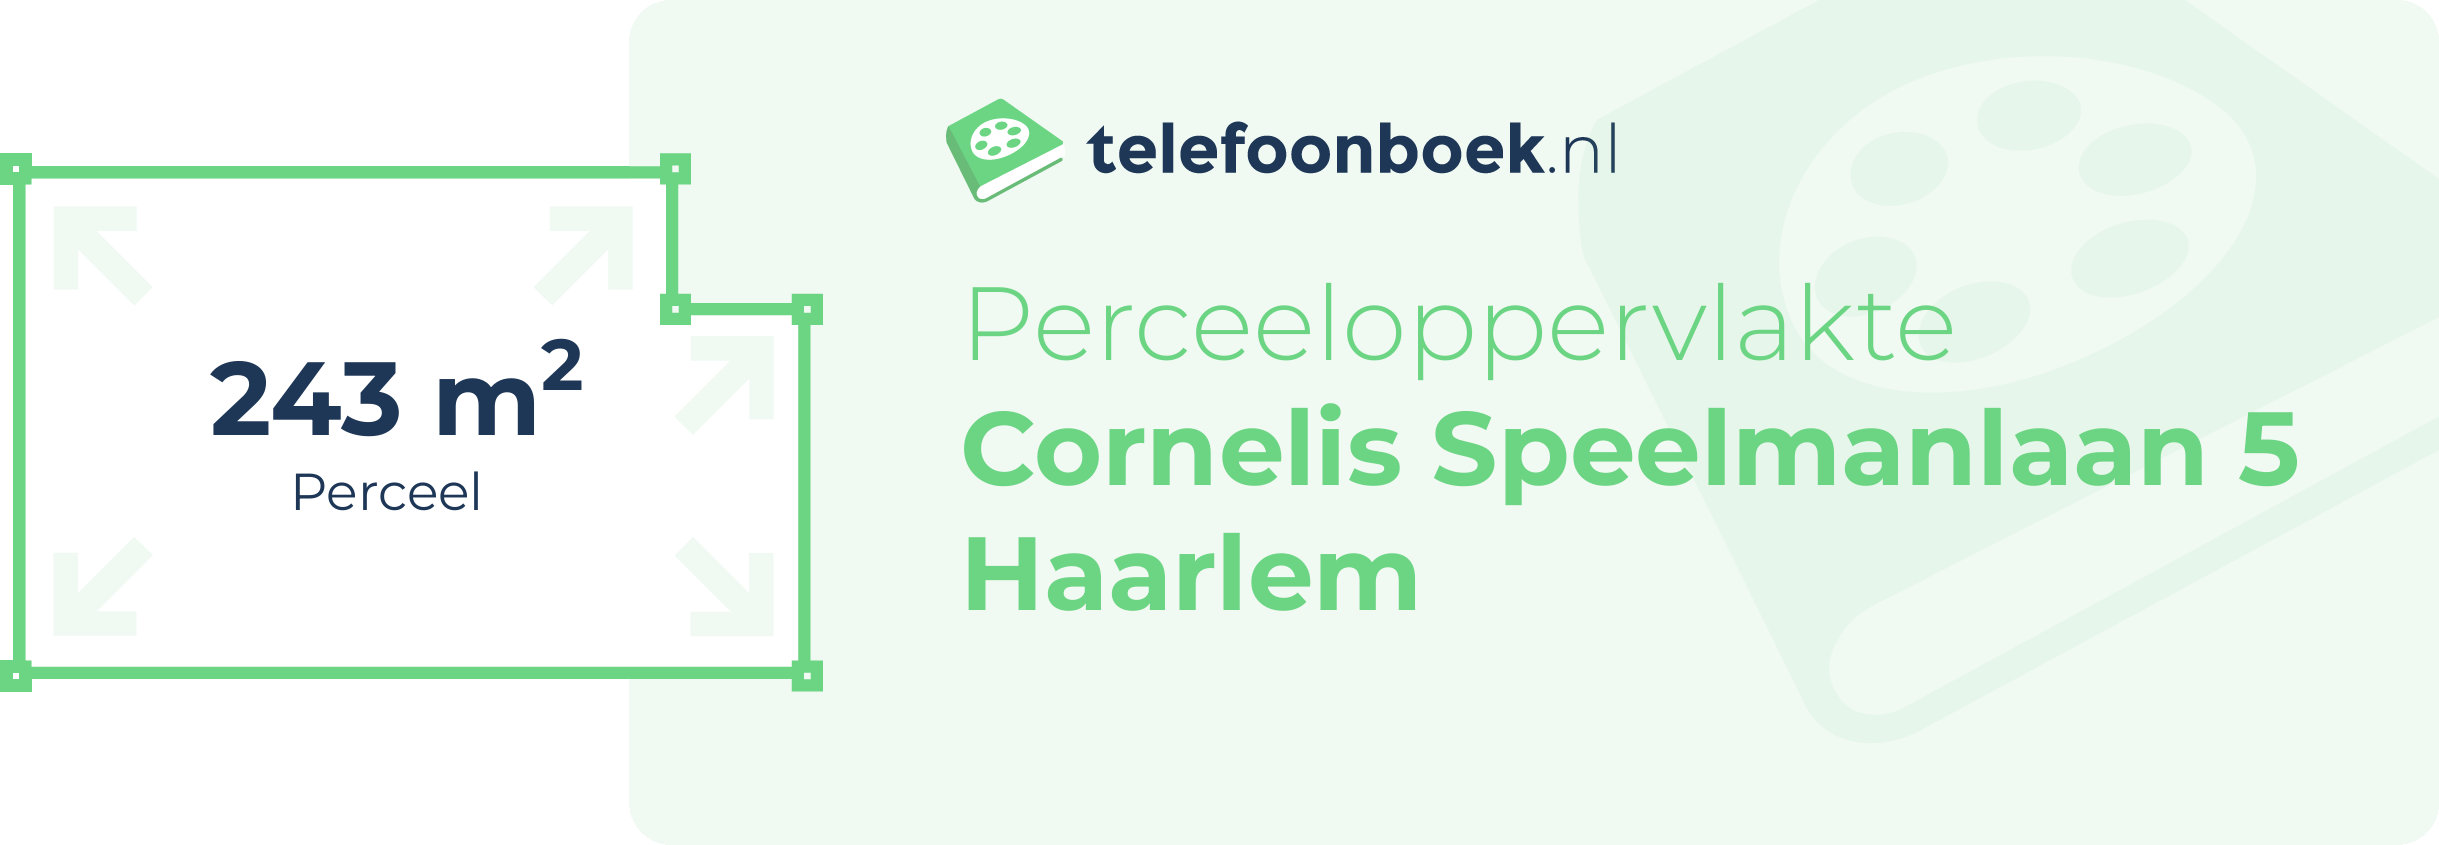 Perceeloppervlakte Cornelis Speelmanlaan 5 Haarlem